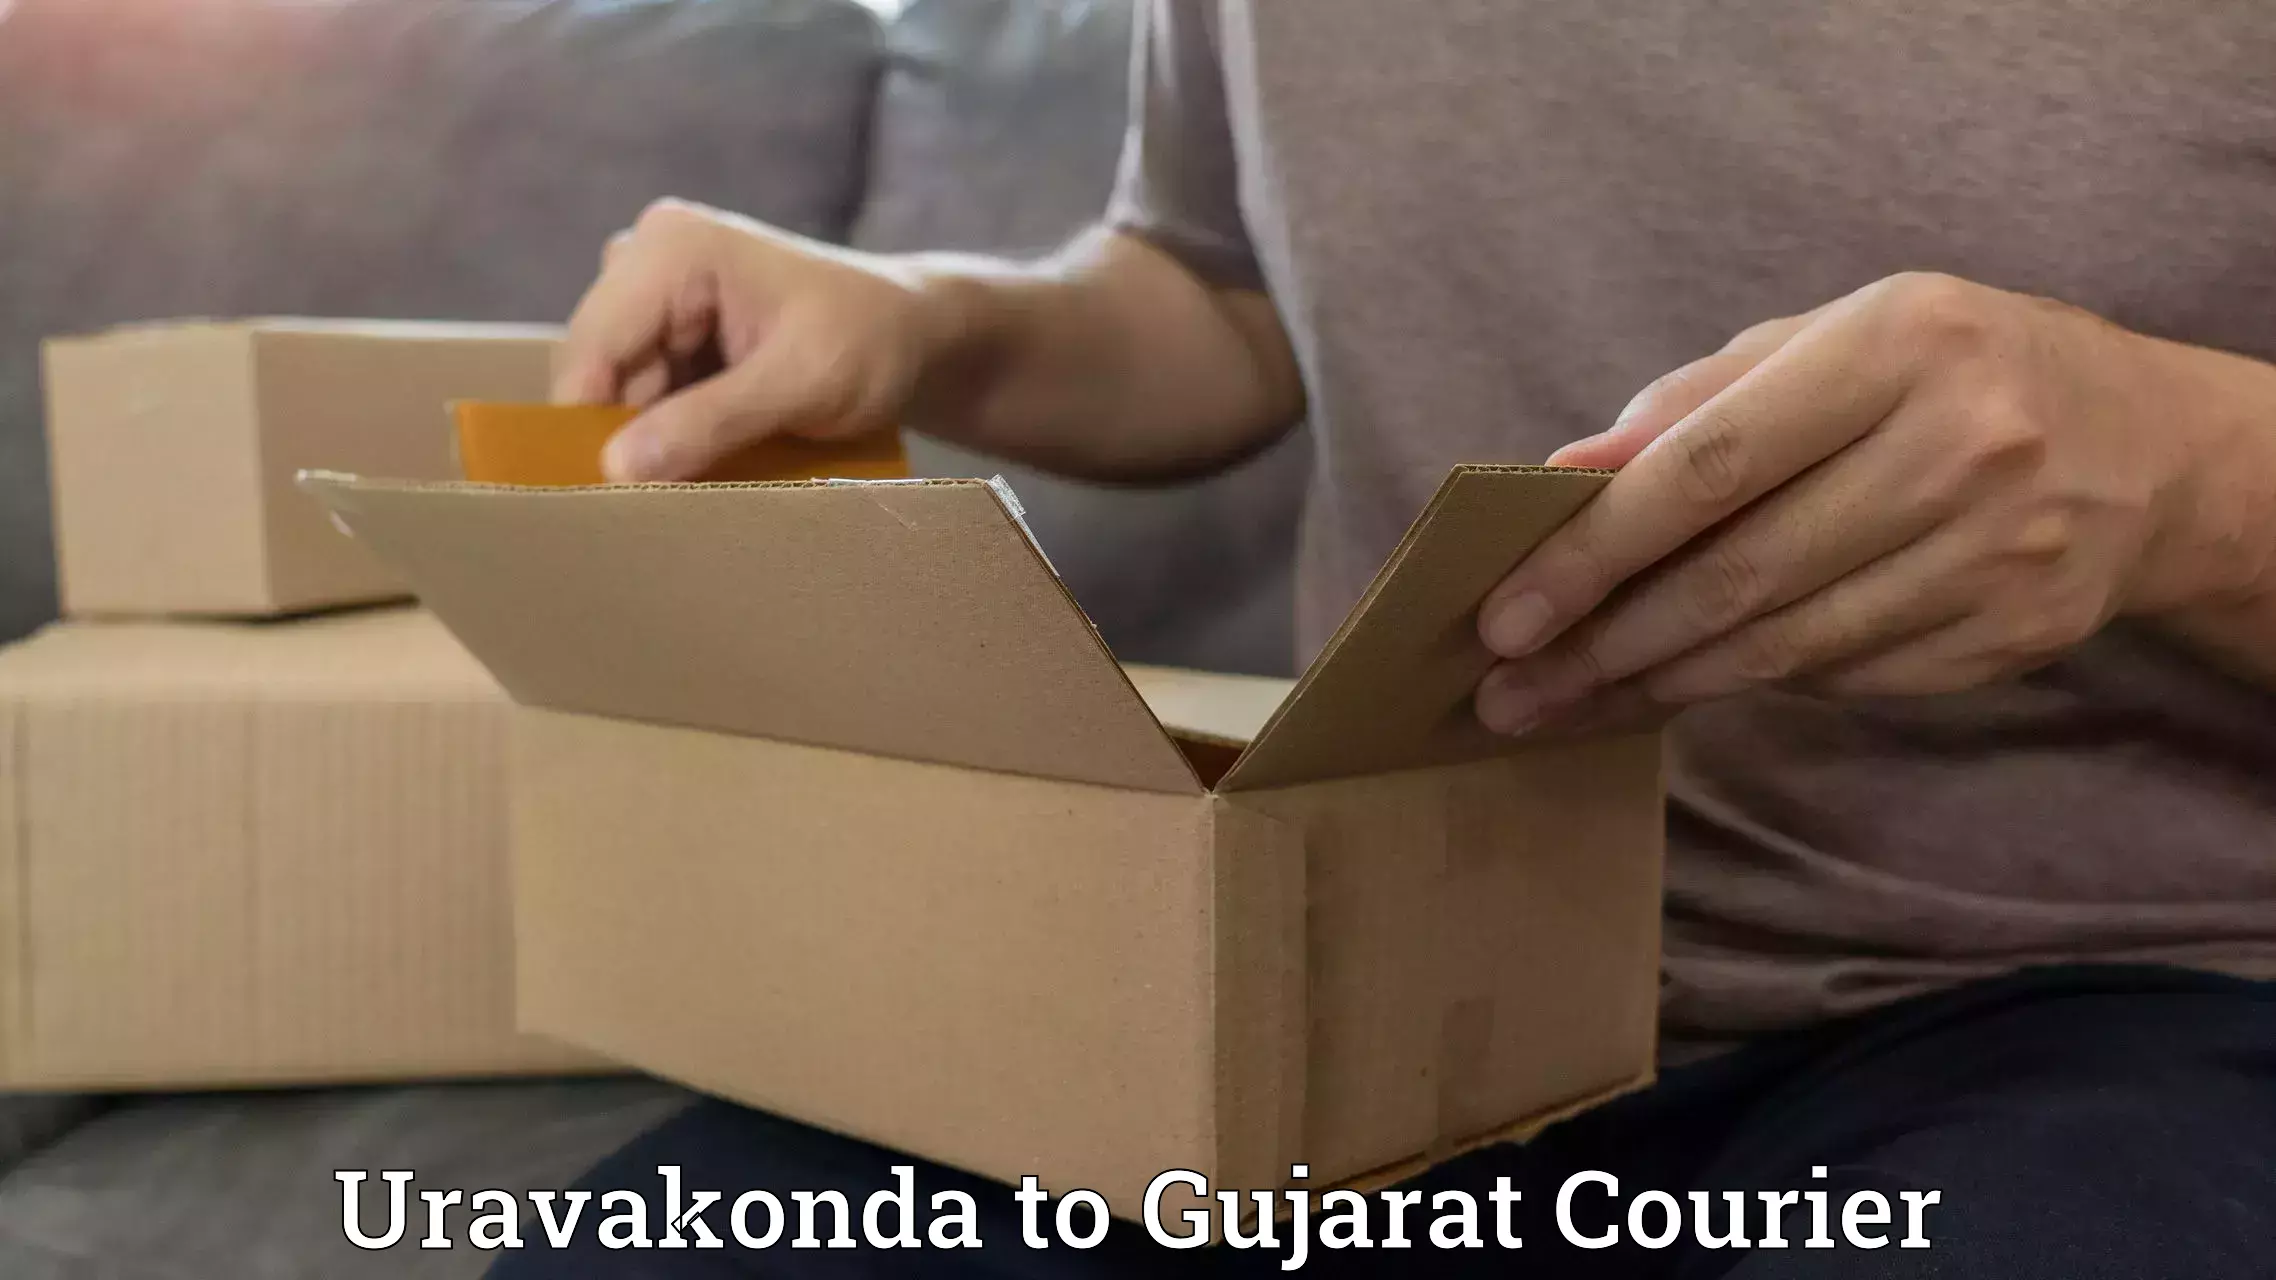 International courier networks Uravakonda to Gujarat